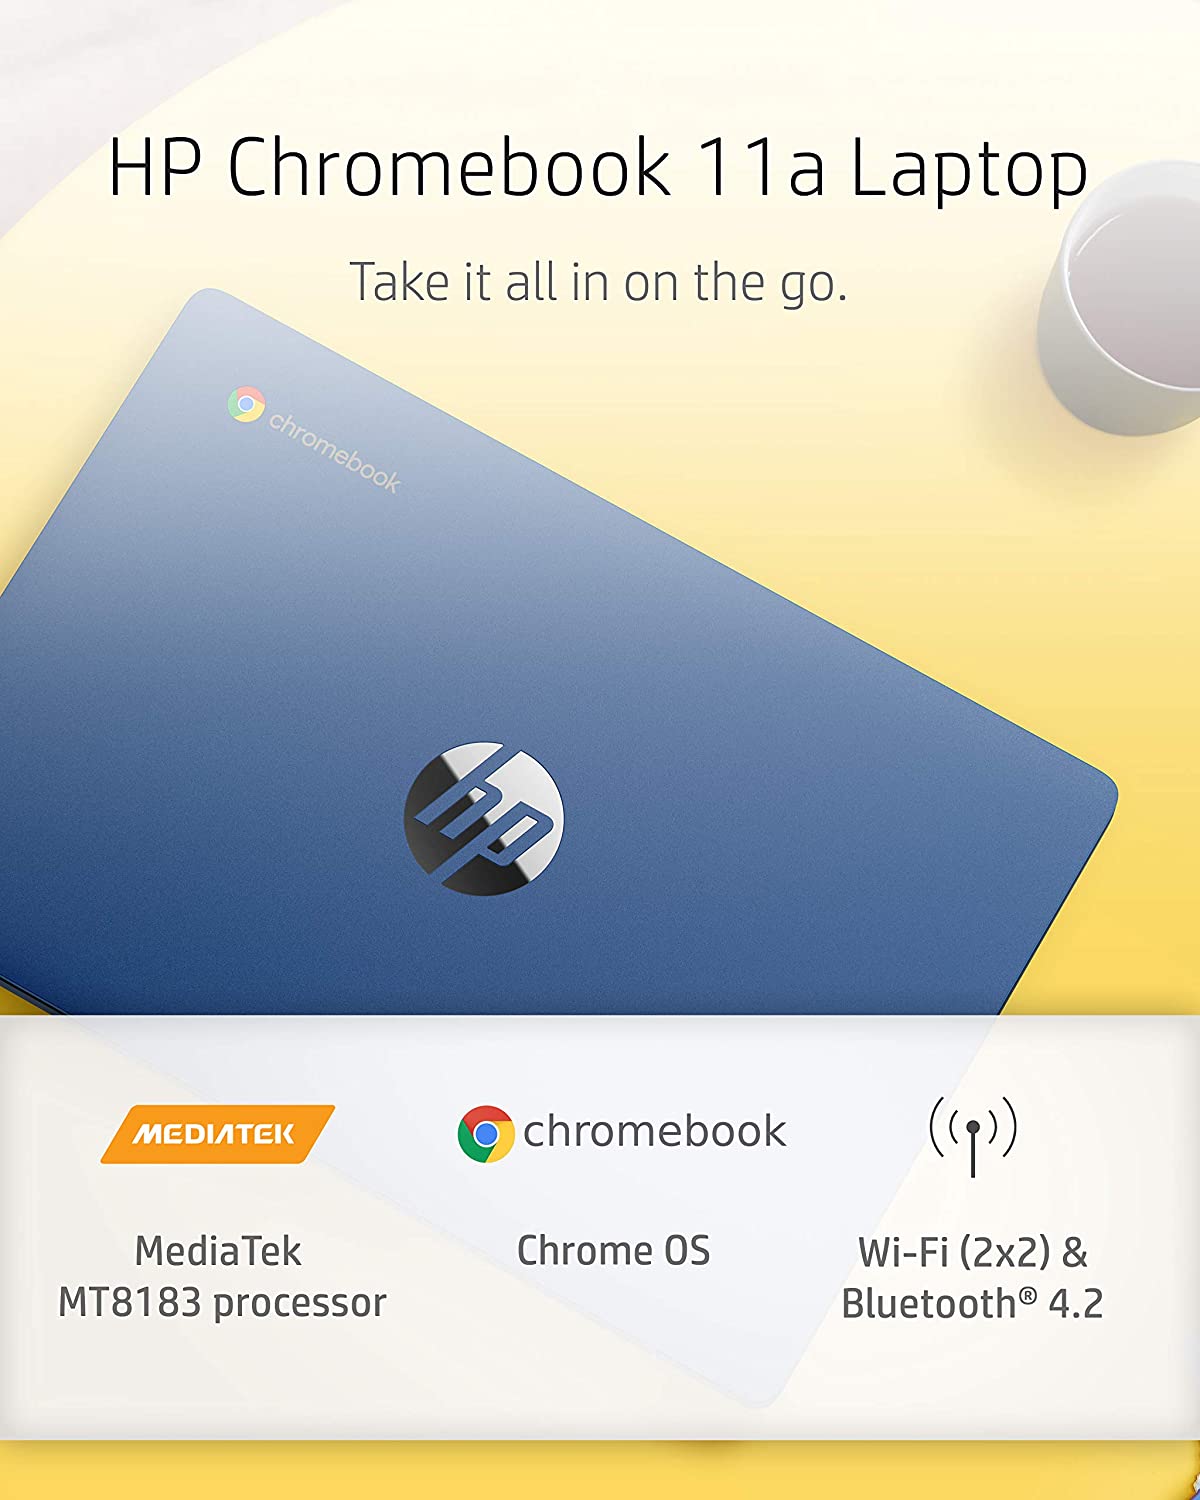 HP Chromebook 11-inch Laptop - MediaTek - MT8183 - 4 GB RAM - 32 GB eMMC Storage - 11.6-inch HD Display - with Chrome OS√É¬¢√¢‚Ç¨≈æ√Ç¬¢ - (11a-na0030nr, 2020 model, Indigo Blue)